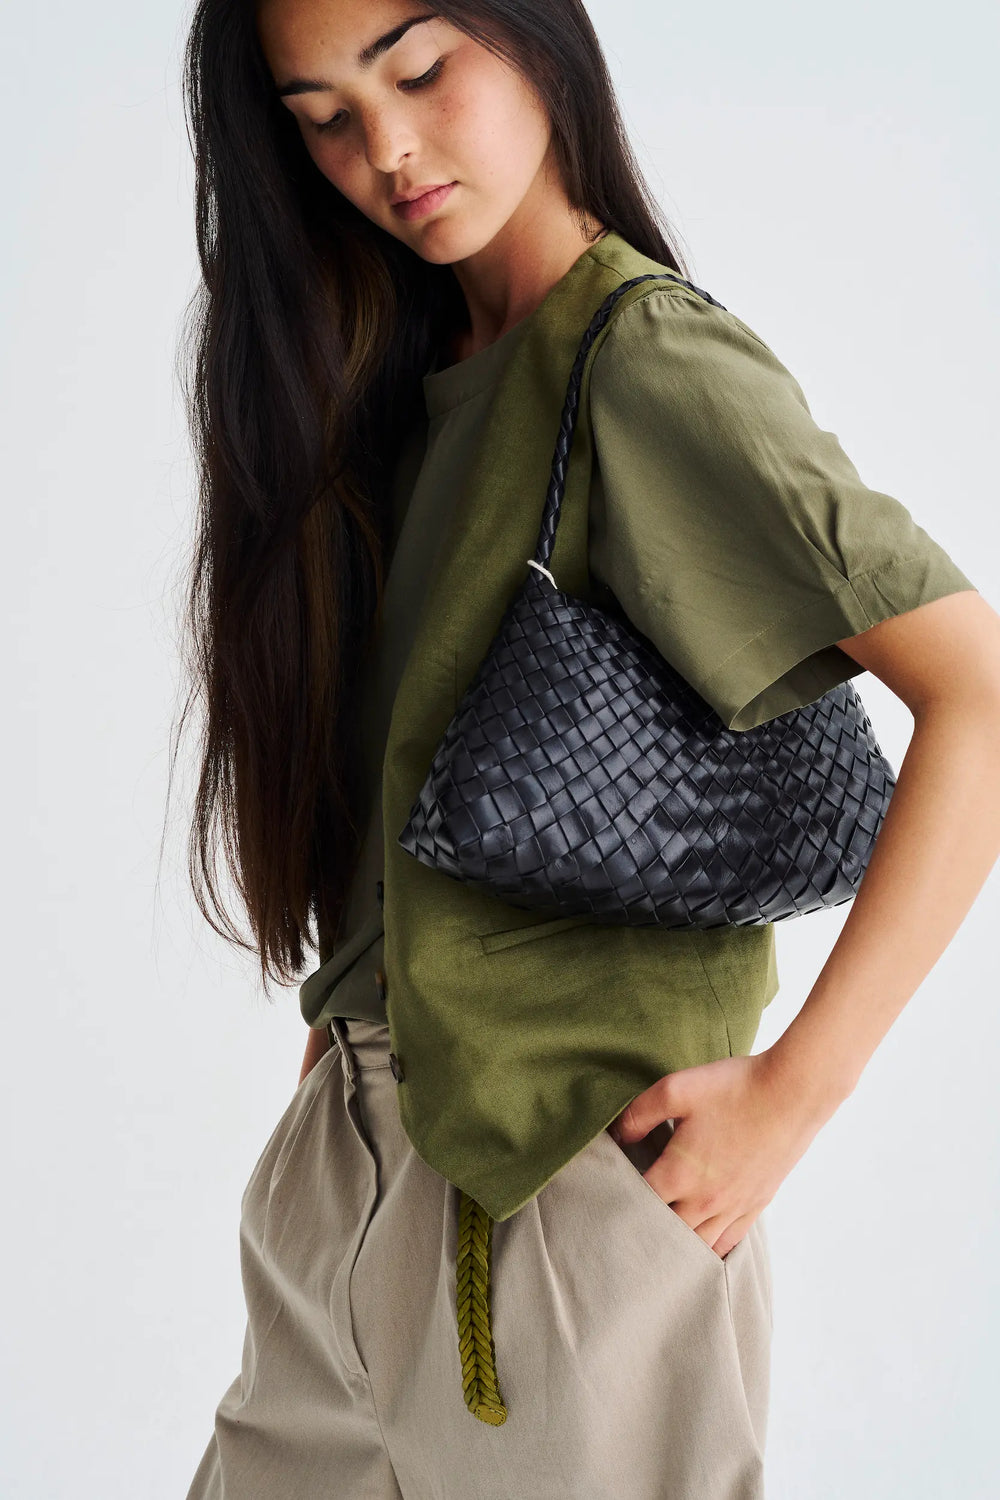 Dragon Diffusion - Woven Leather Bag Handmade - Rosanna Black